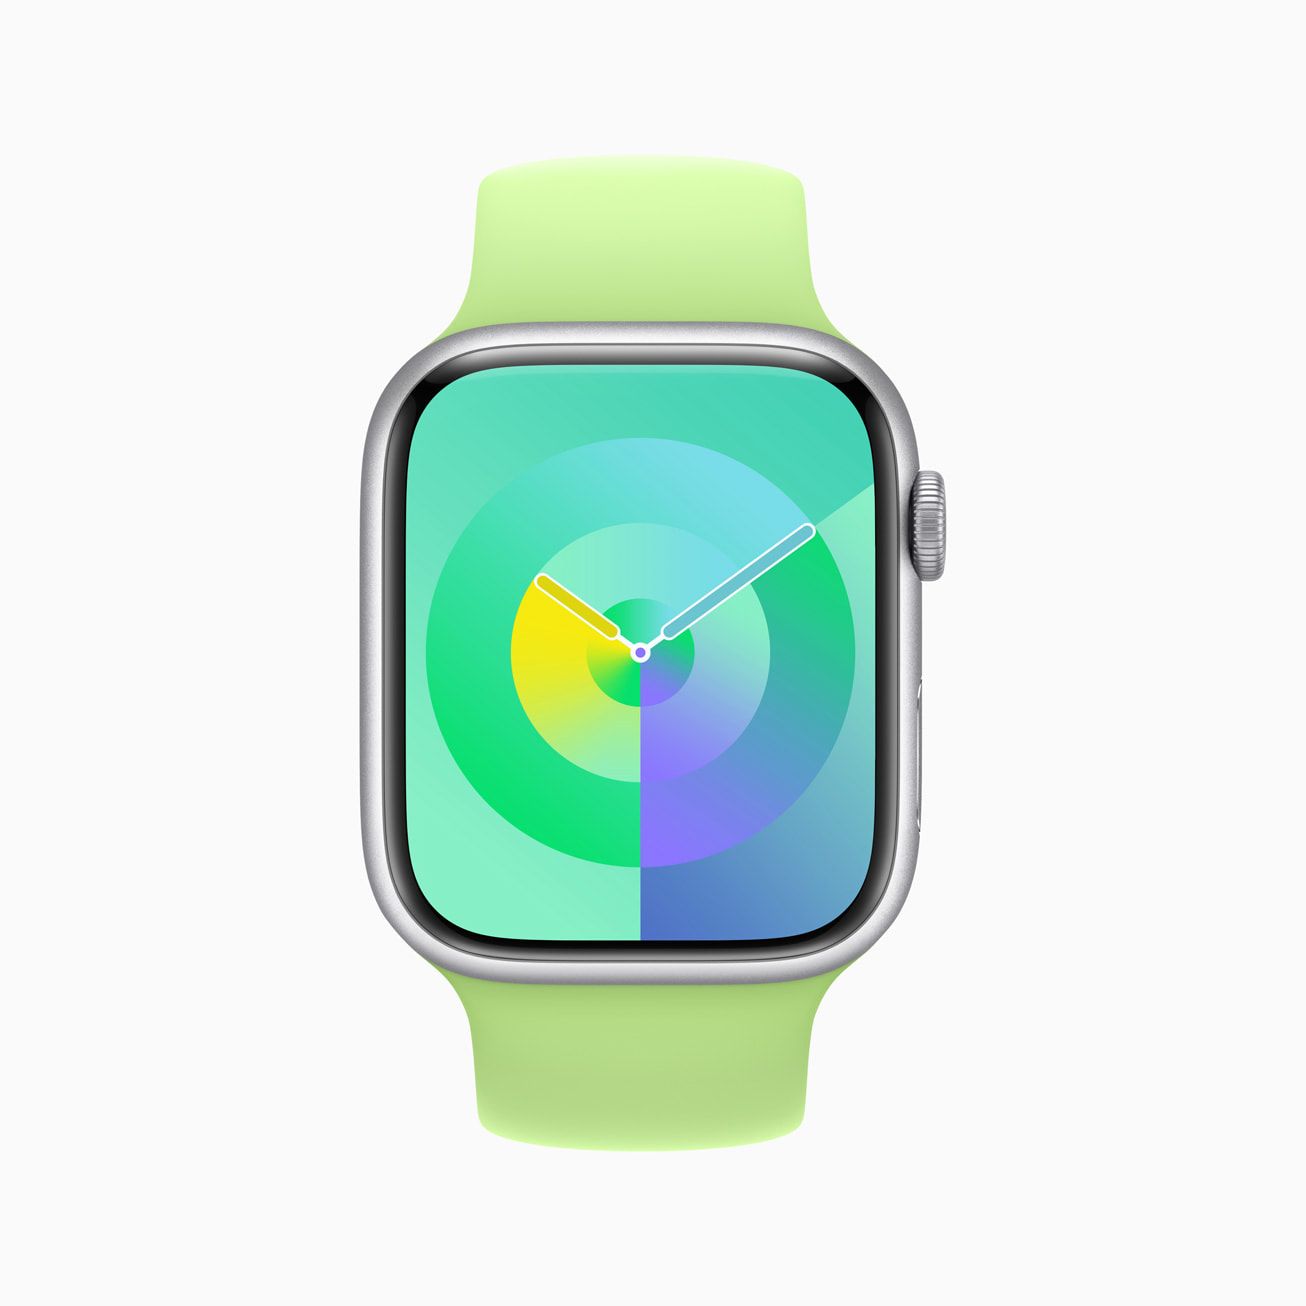 Apple-WWDC23-watchOS-10-new-Watch-faces-Palette-Emerald-230605_inline.jpg.large_2x